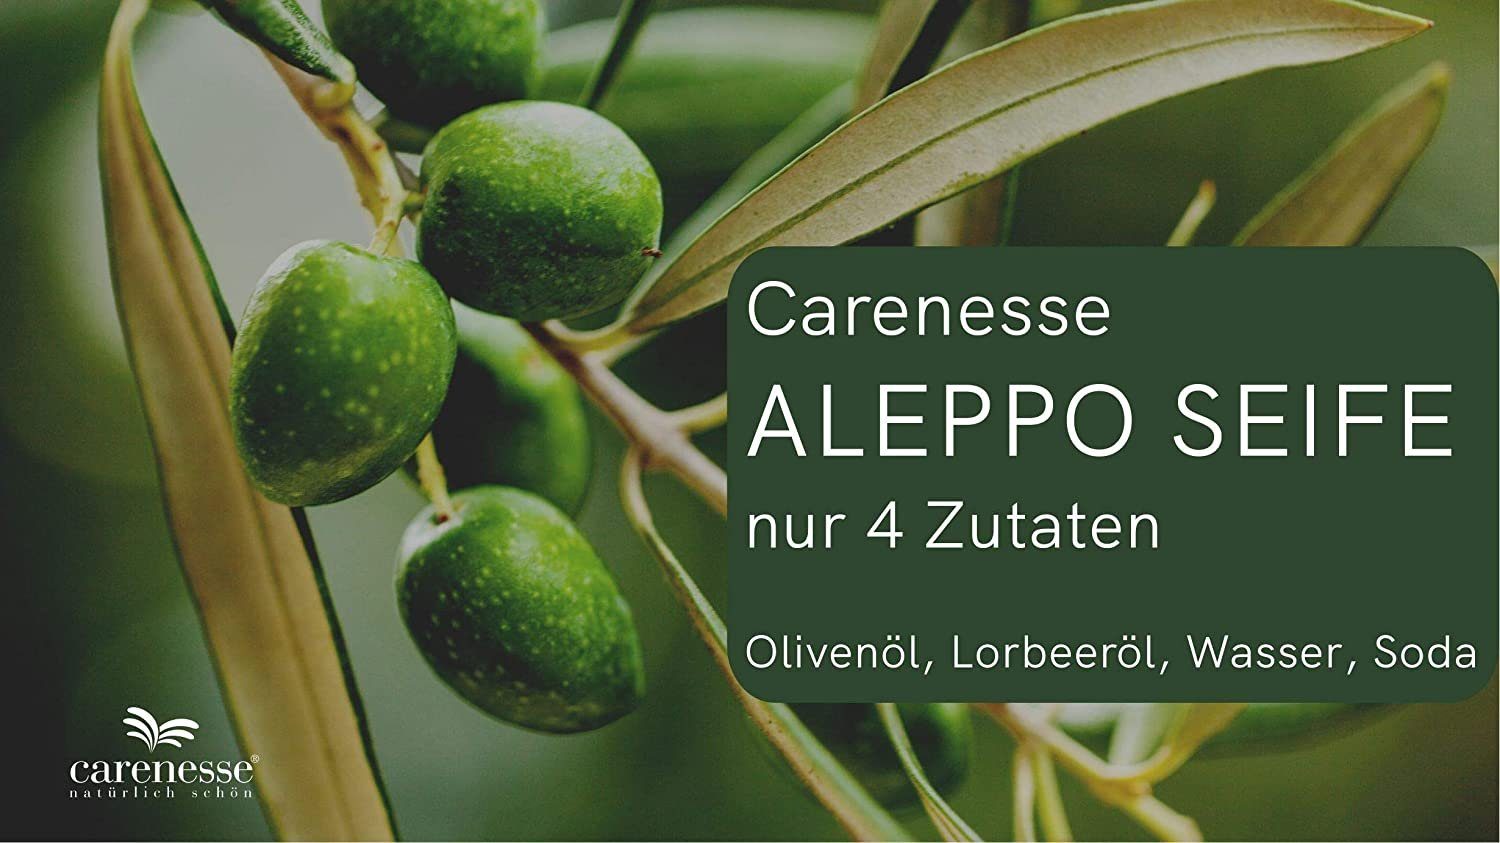 Alepposeife Olivenöl, 55% & Original Handseife Olivenölseife, Lorbeeröl Seife Aleppo Aleppo-Seife Gesichtsseife Carenesse Haarseife 45% Lorbeerölseife